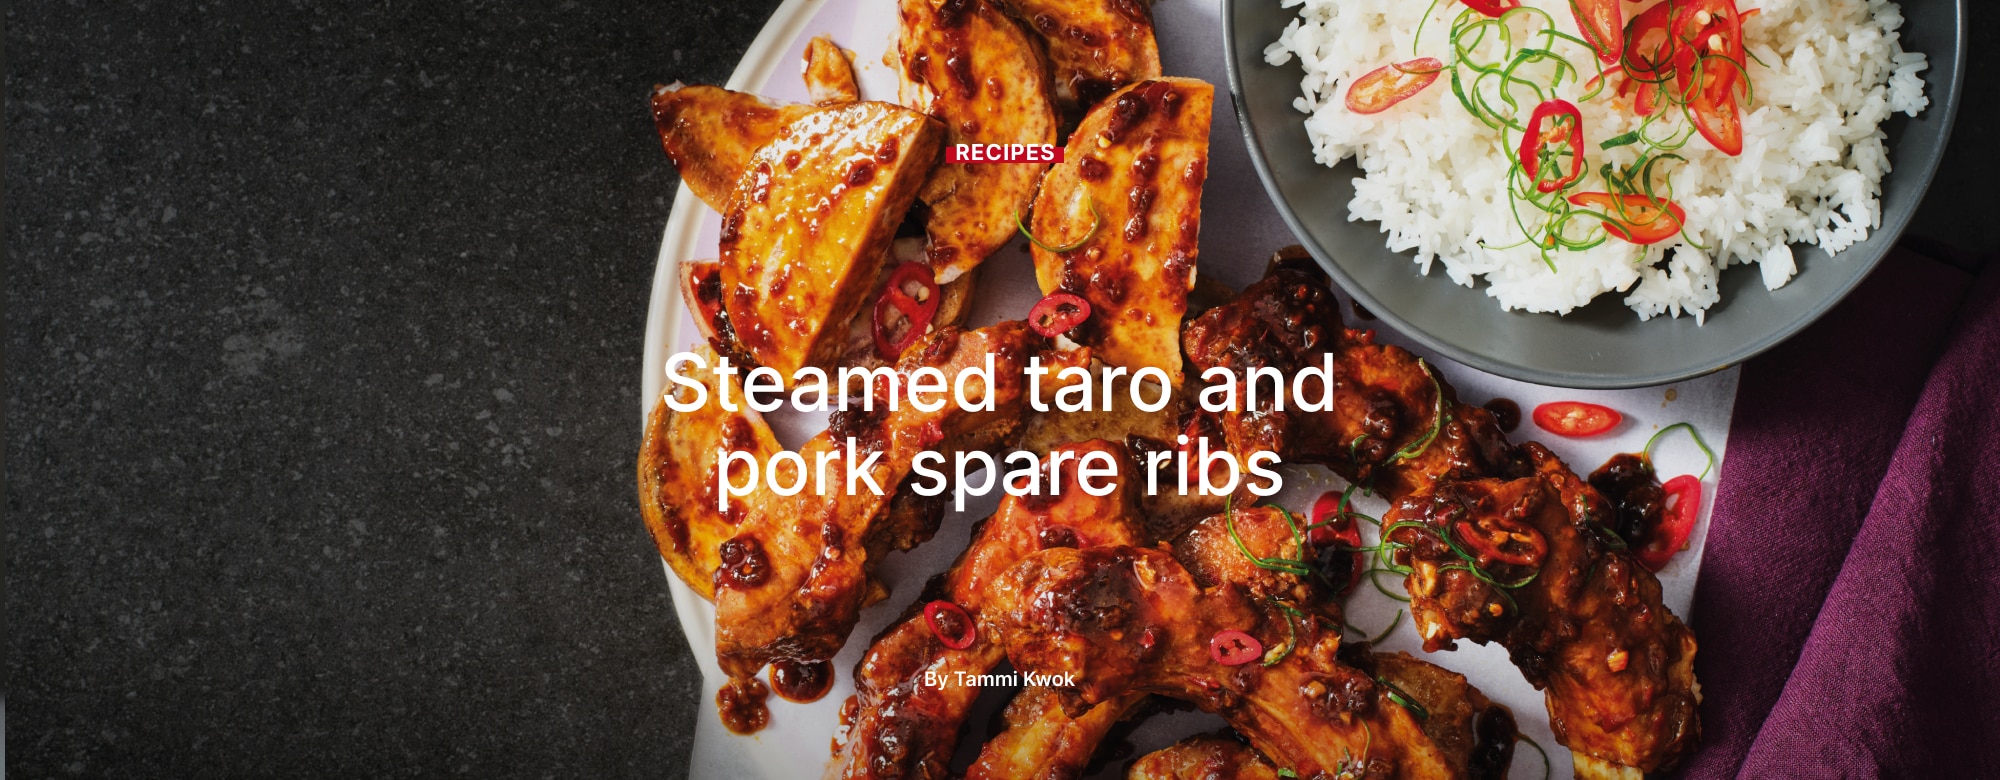 Steamed taro and
pork spare ribs